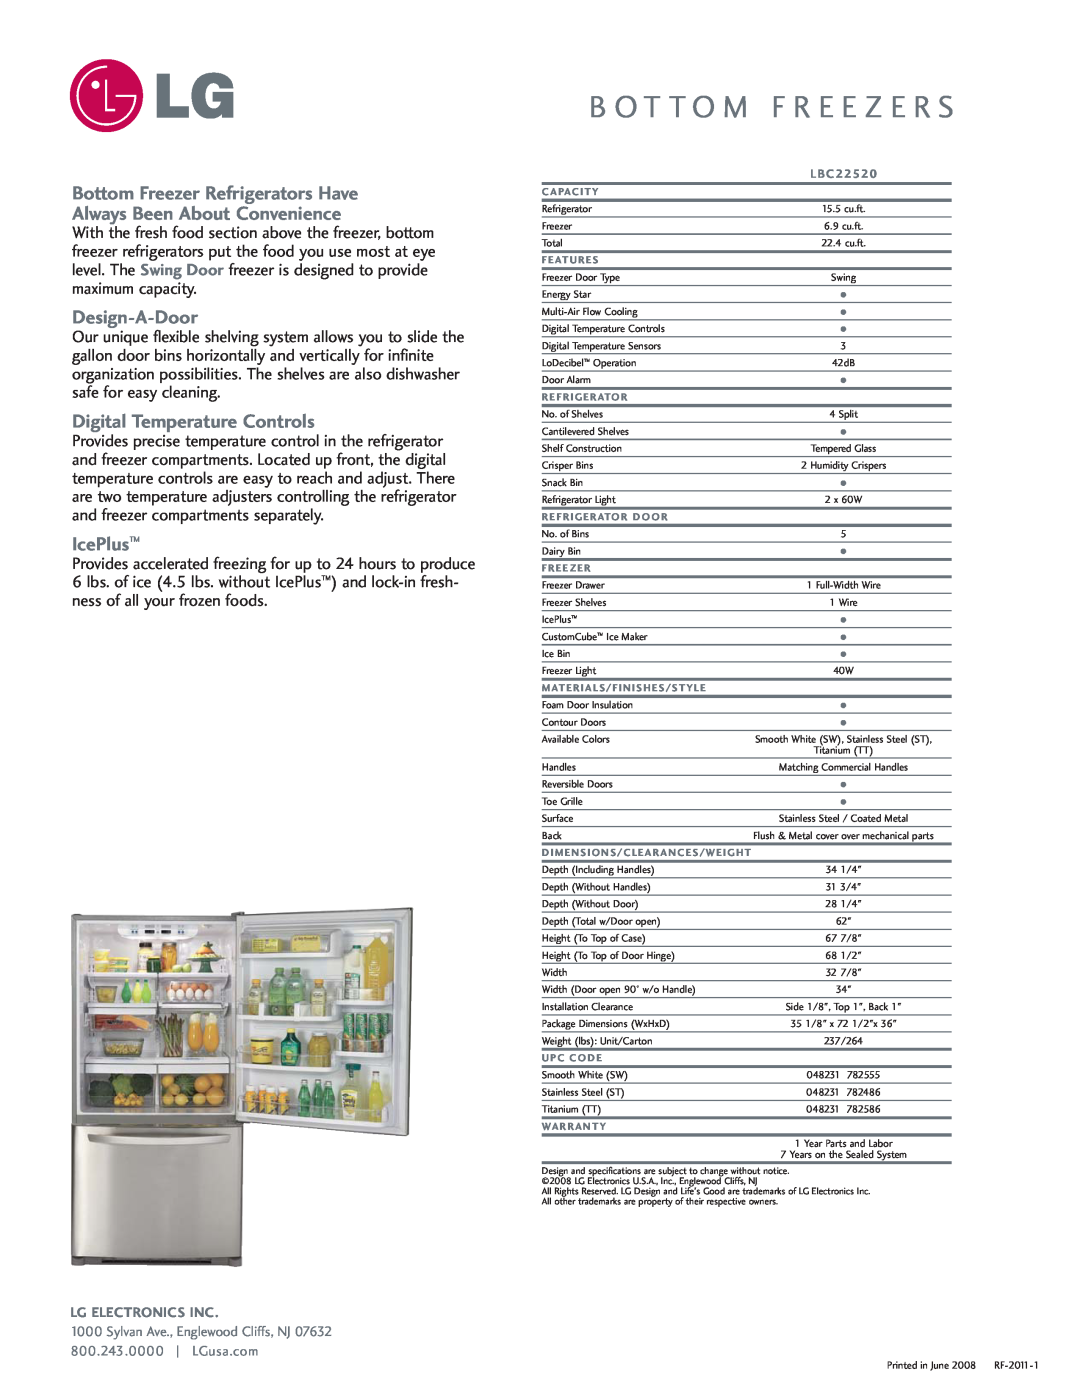 LG Electronics LBC22520 manual Bottom Freezer Refrigerators Have, Always Been About Convenience, Design-A-Door, IcePlus 